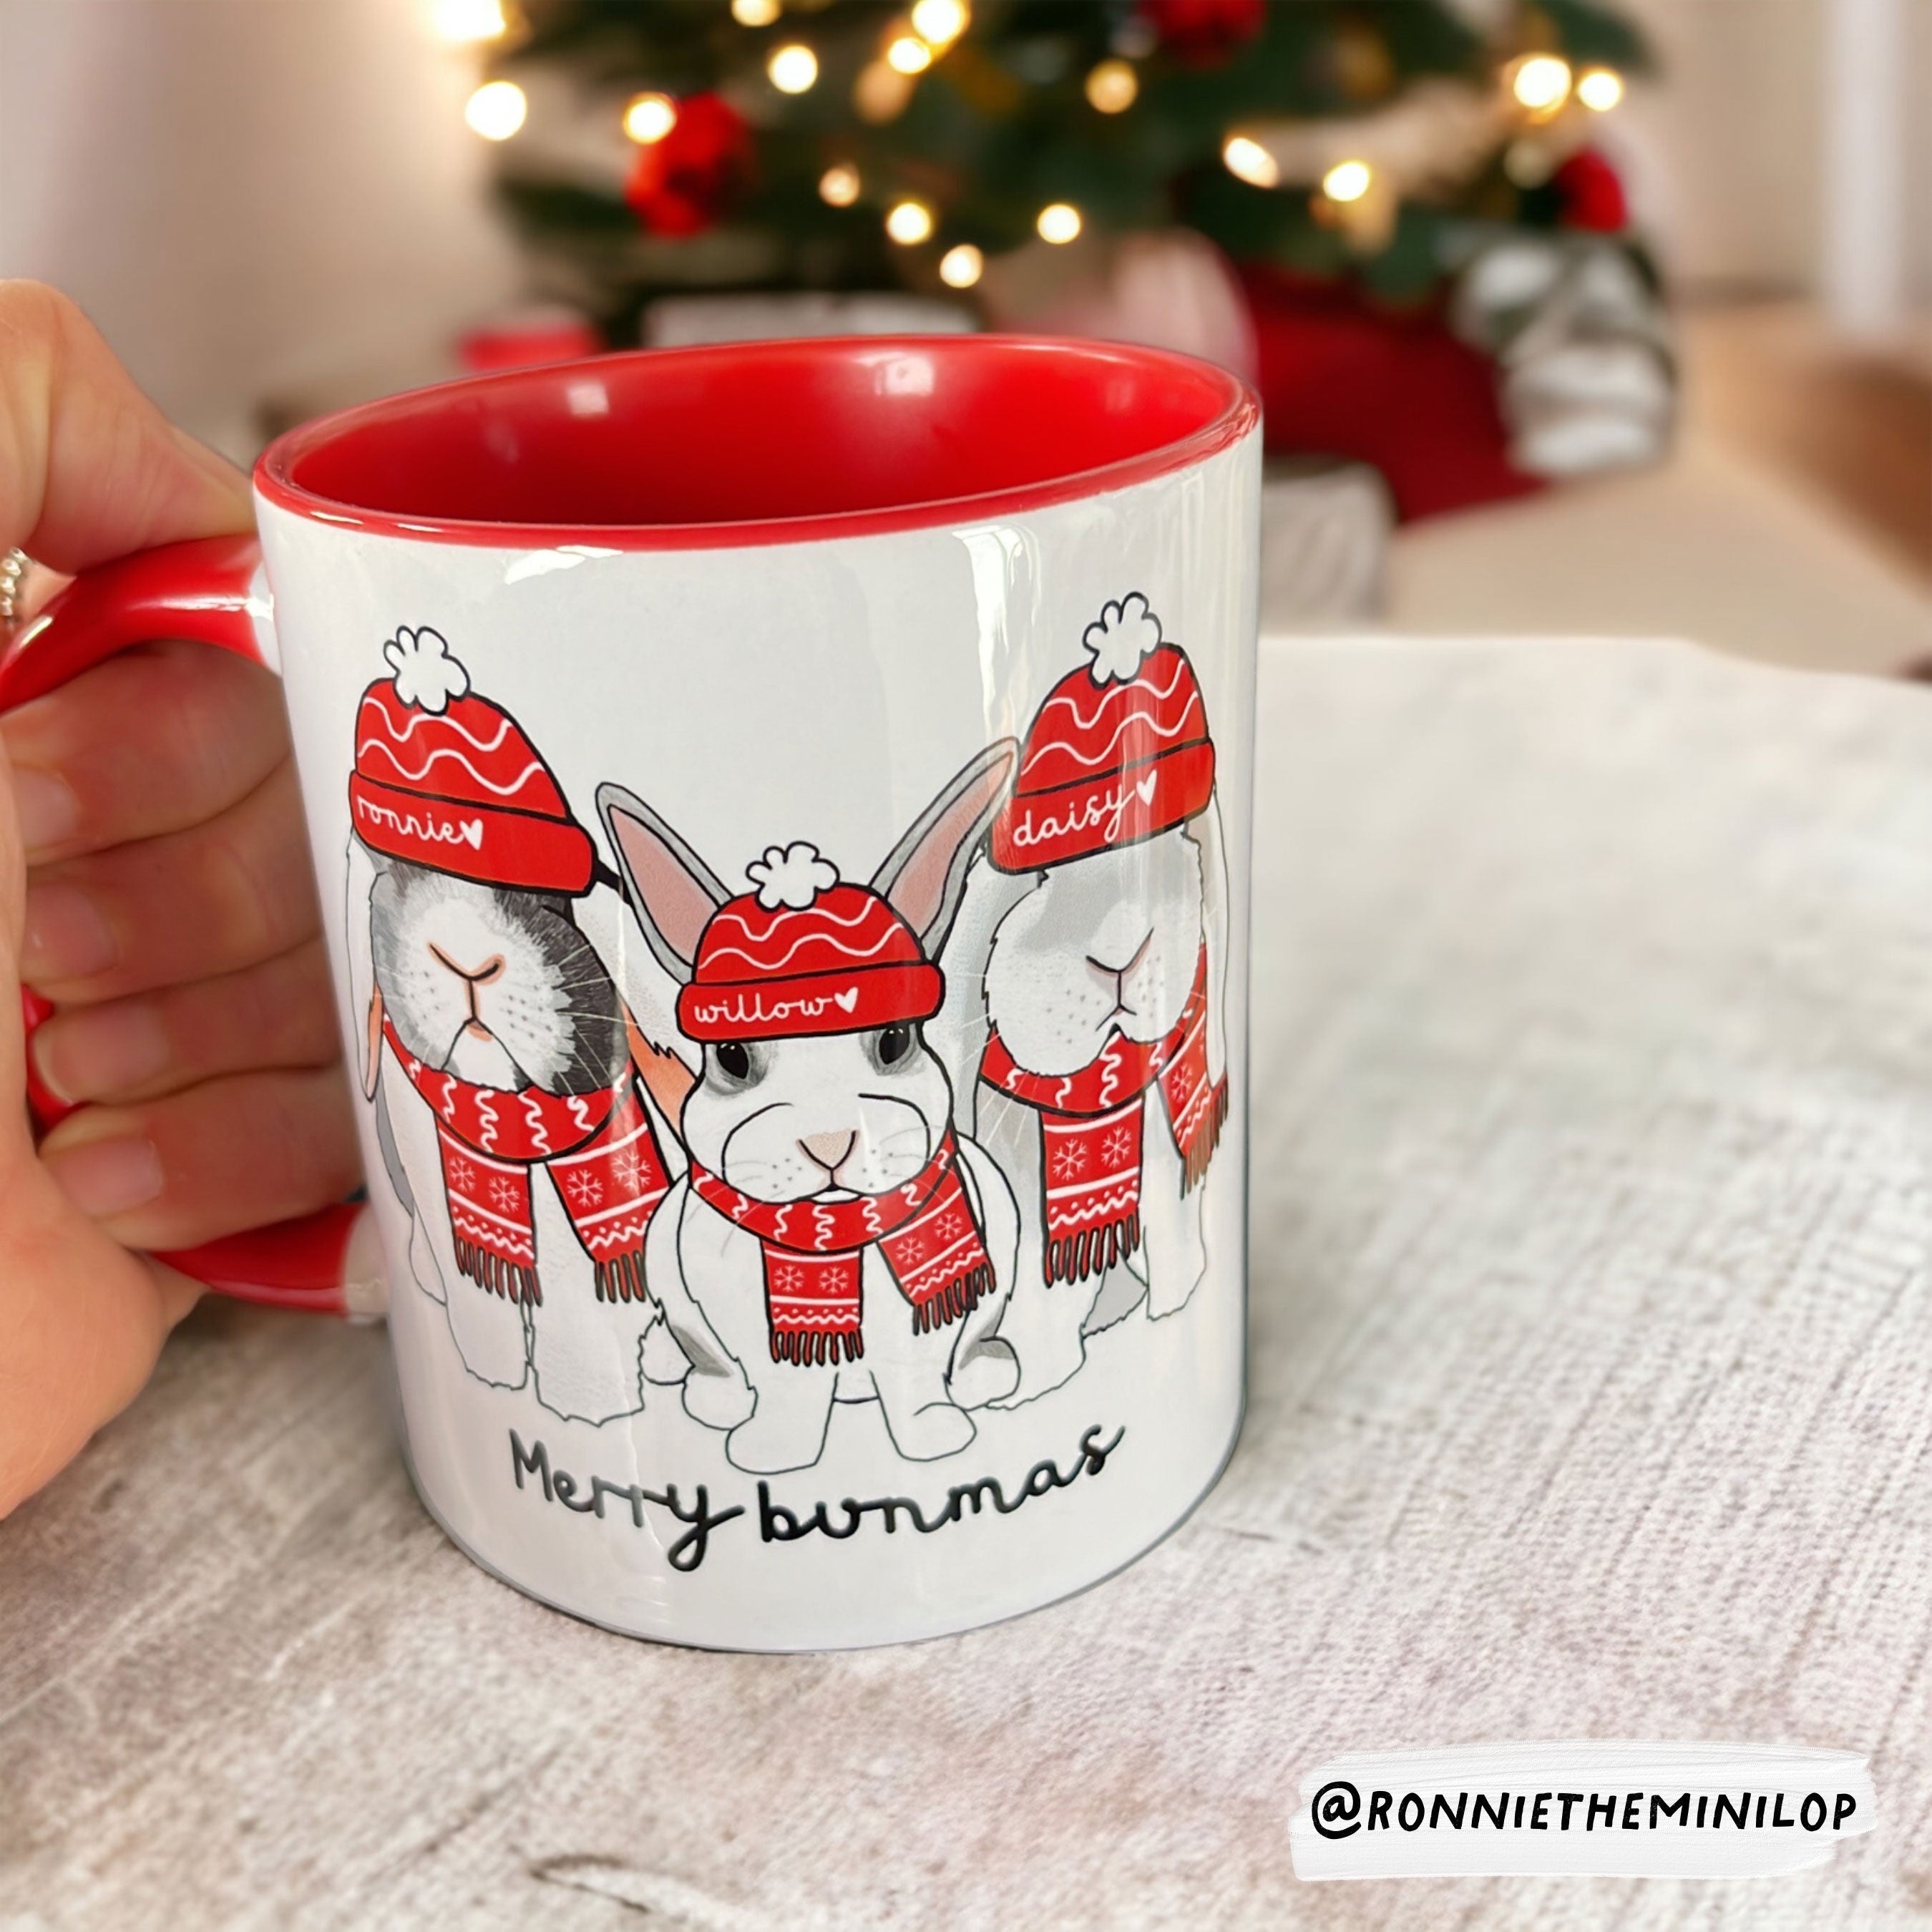 Personalised Merry Bunmas Christmas Jumper